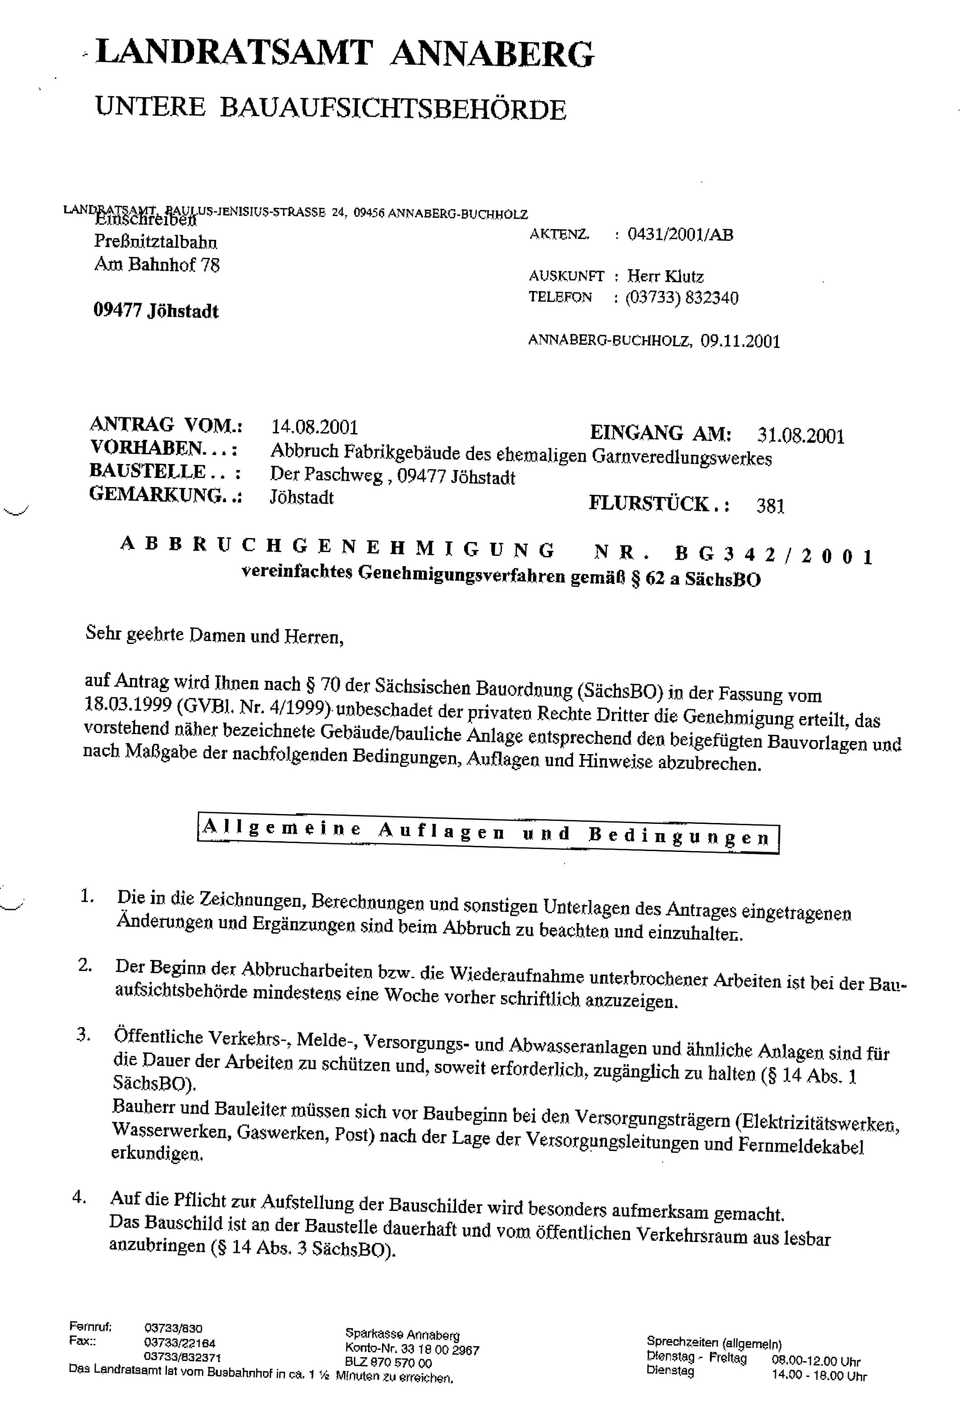 Abbruchgenehmigung des Landratsamtes Annaberg